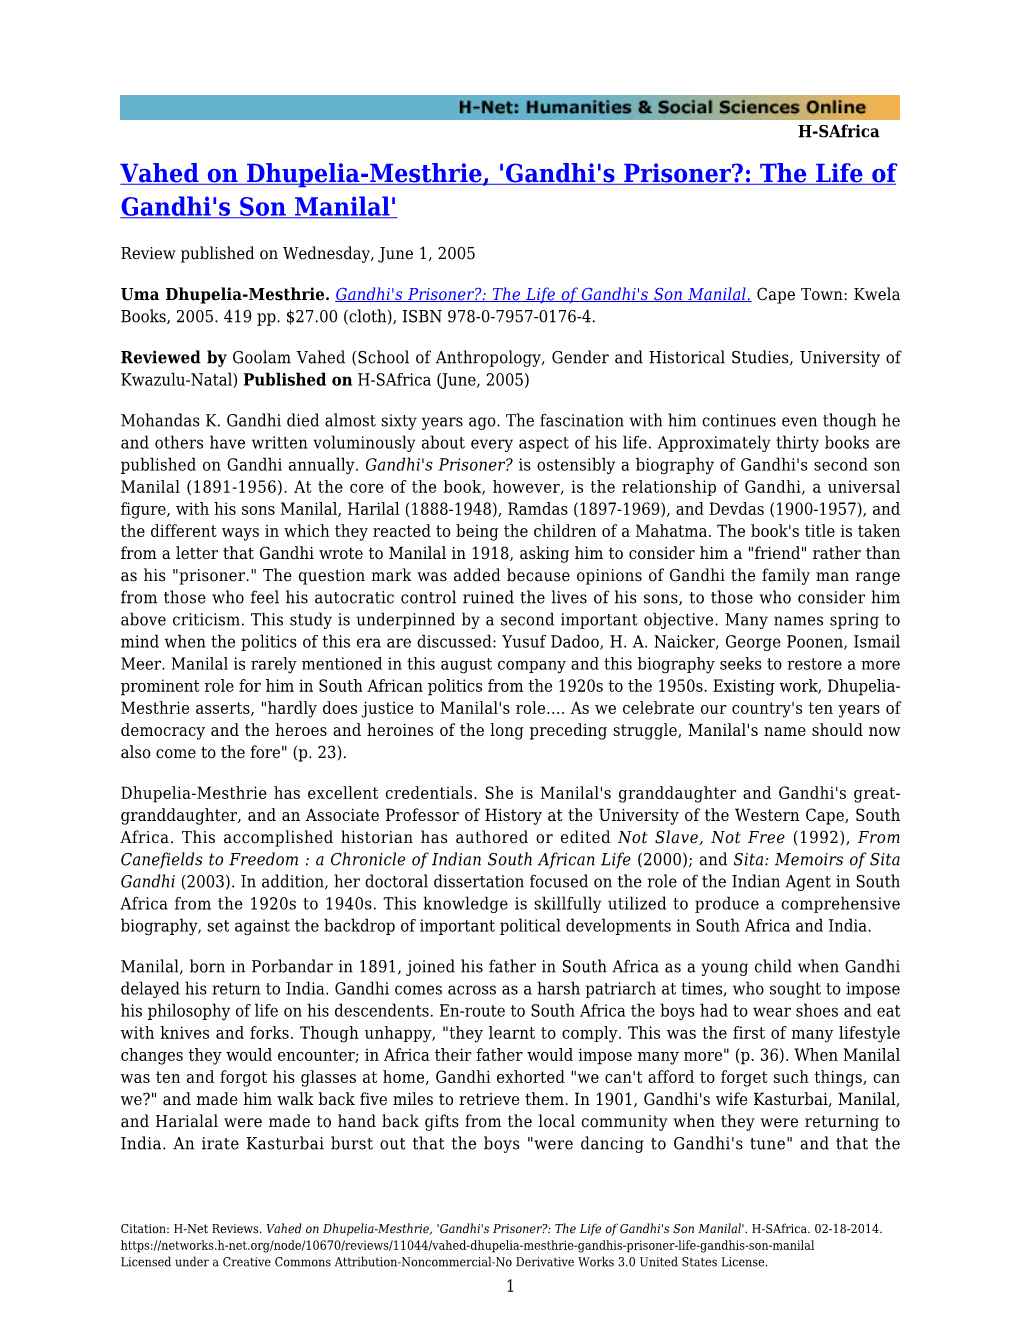 'Gandhi's Prisoner?: the Life of Gandhi's Son Manilal'